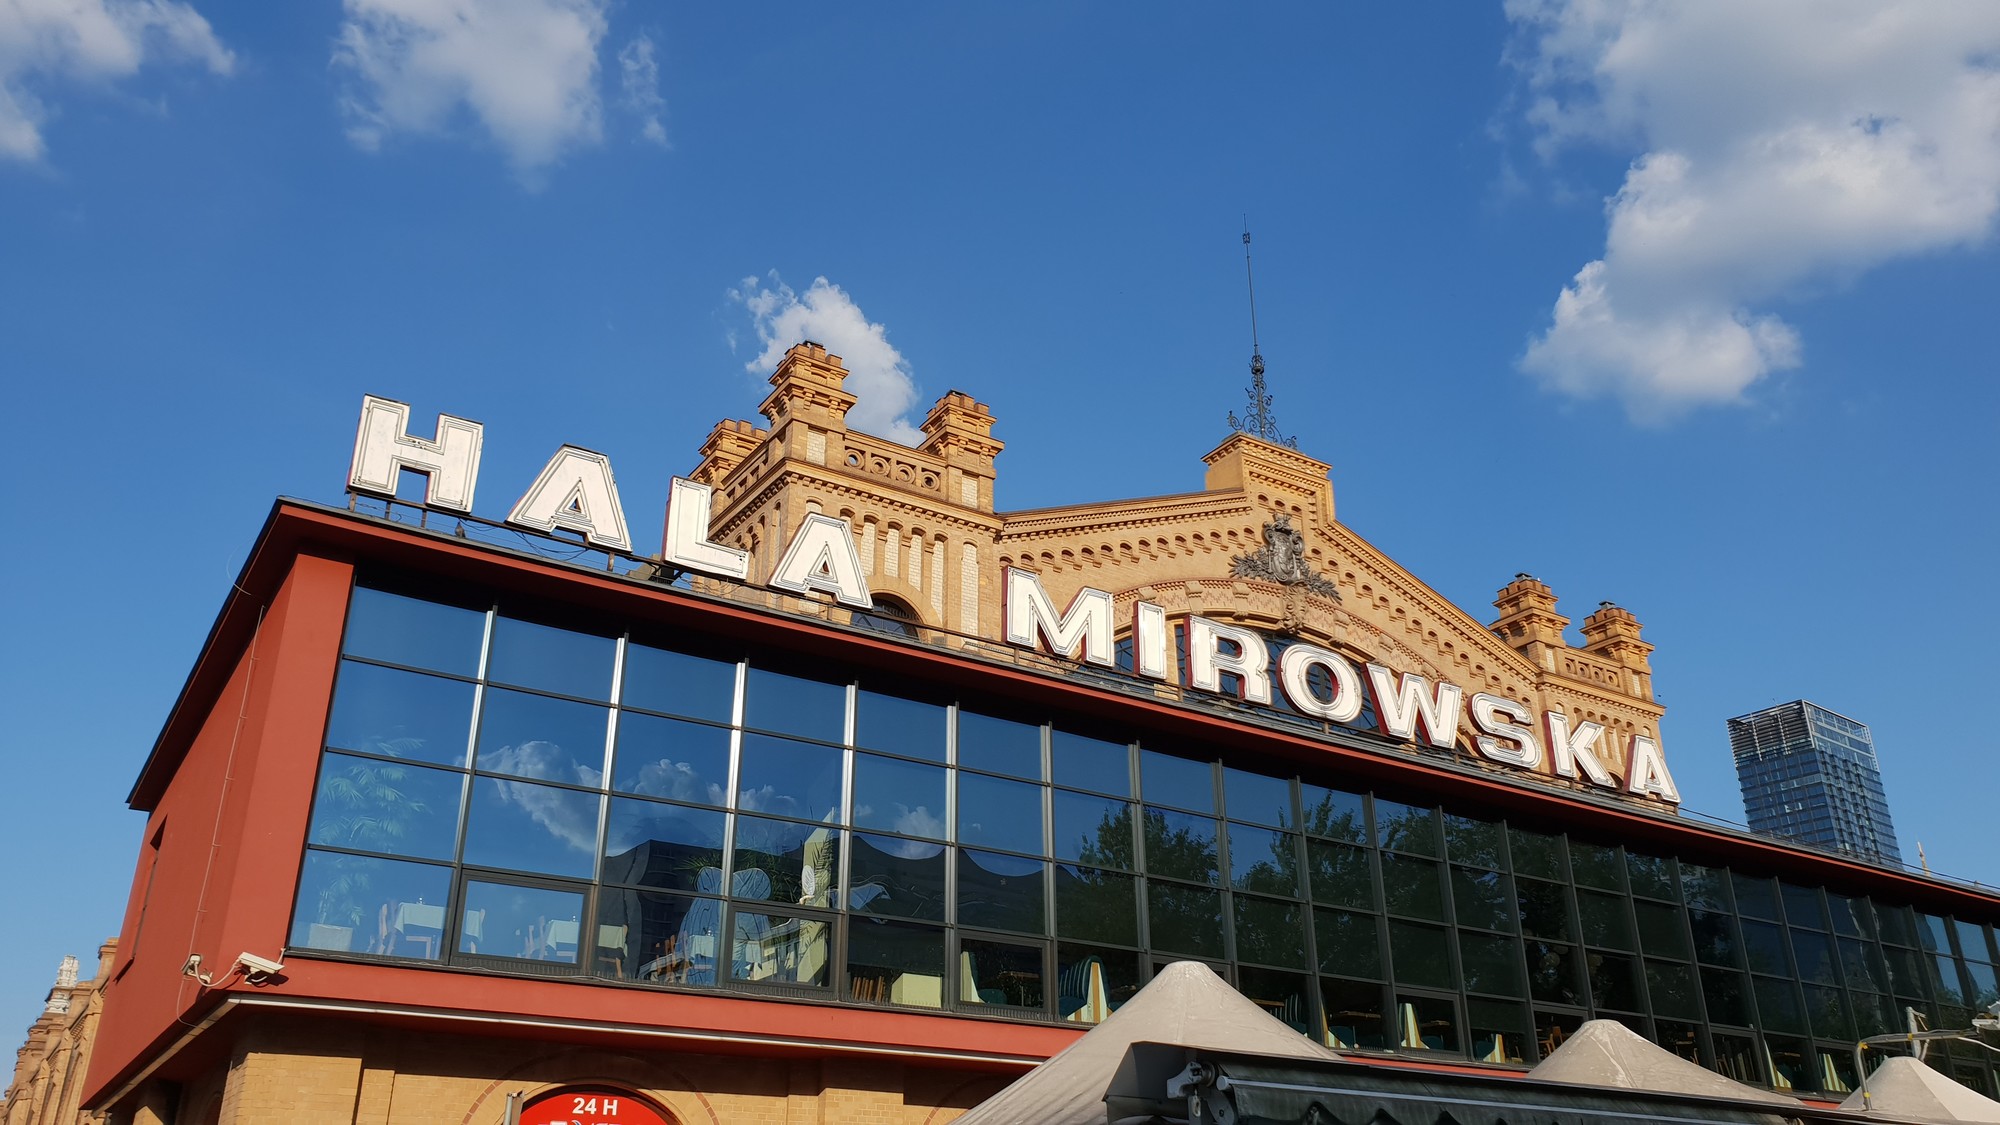 Hala Mirowska | Shopping in Warsaw | Warsaw